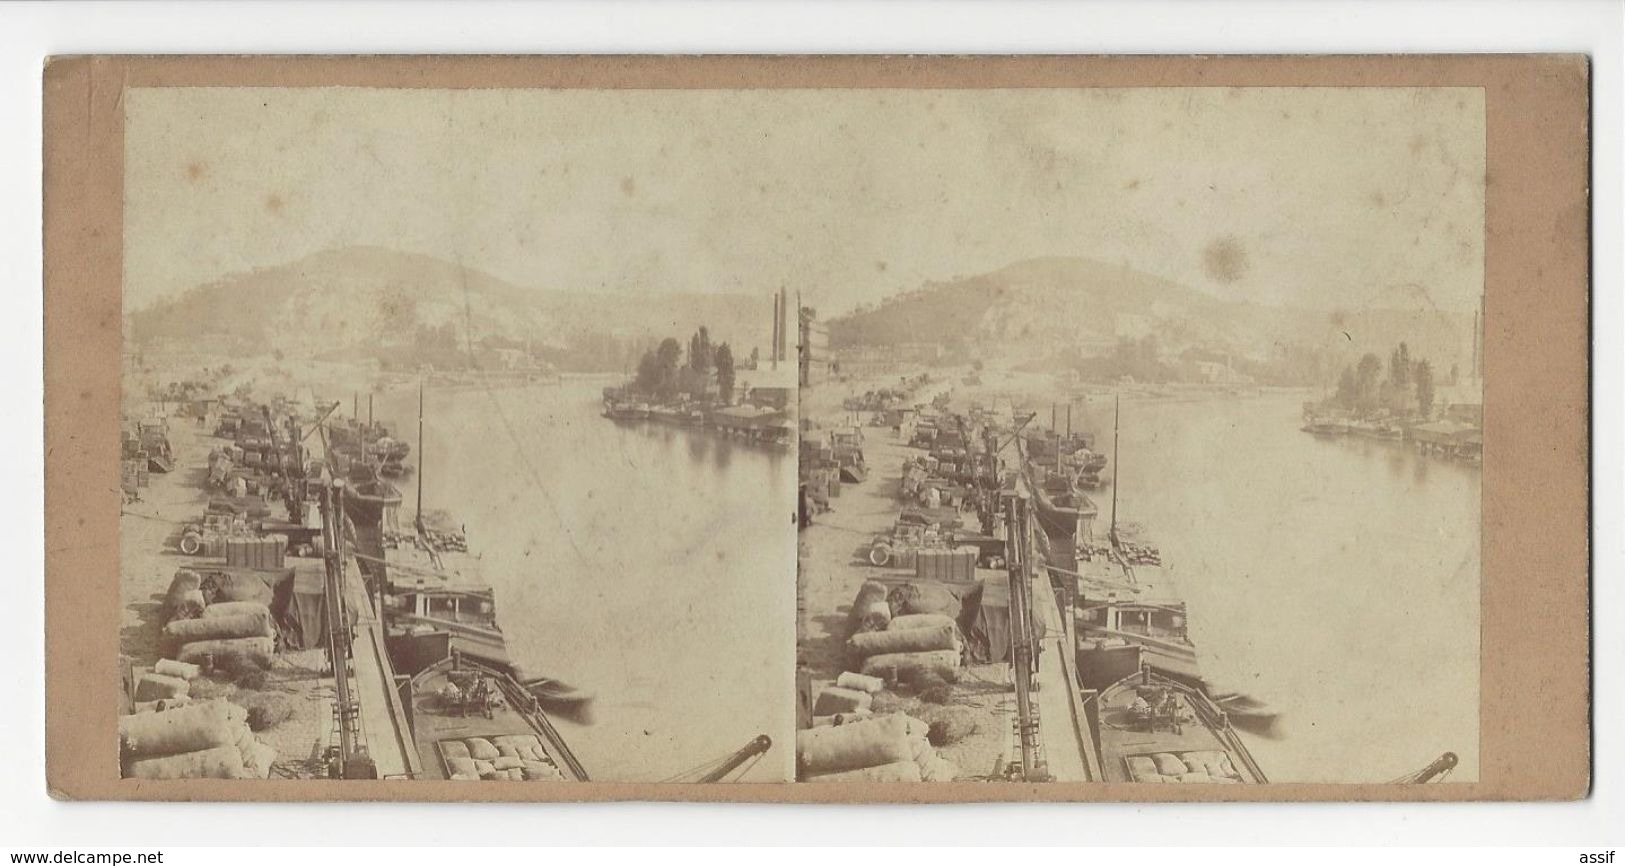 ROUEN EMBARCADERE DES BATEAUX A VAPEUR PHOTO STÉRÉO CIRCA 1860 /FREE SHIPPING REGISTERED - Stereoscopio